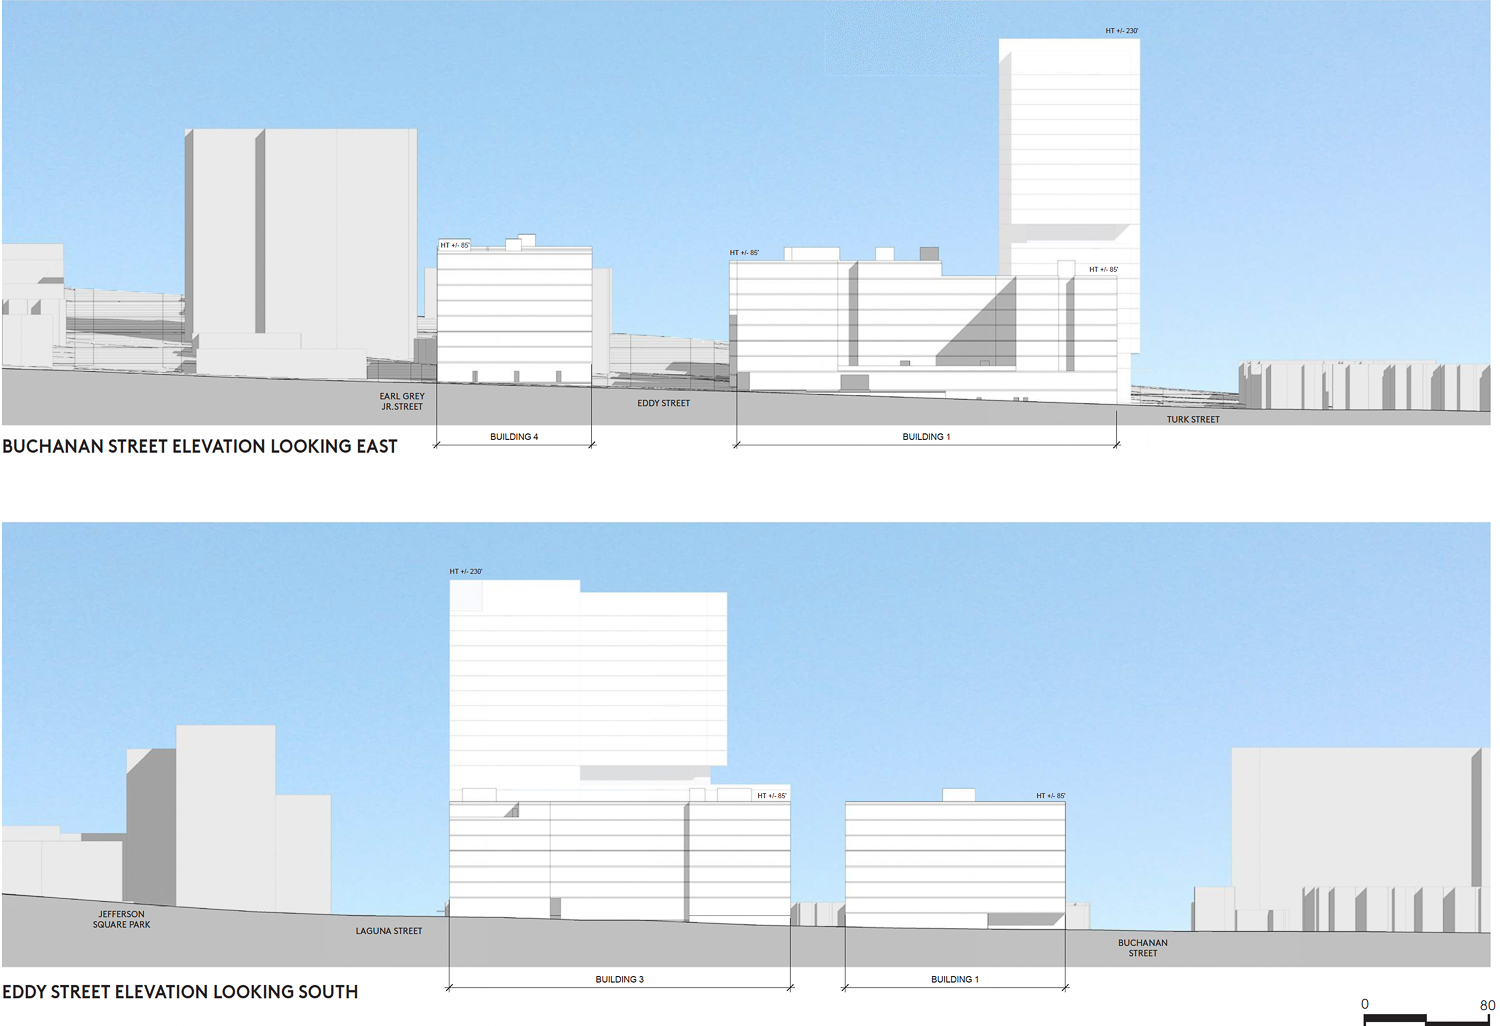 New East Plaza vertical elevations, illustration by Mithun, Multistudio